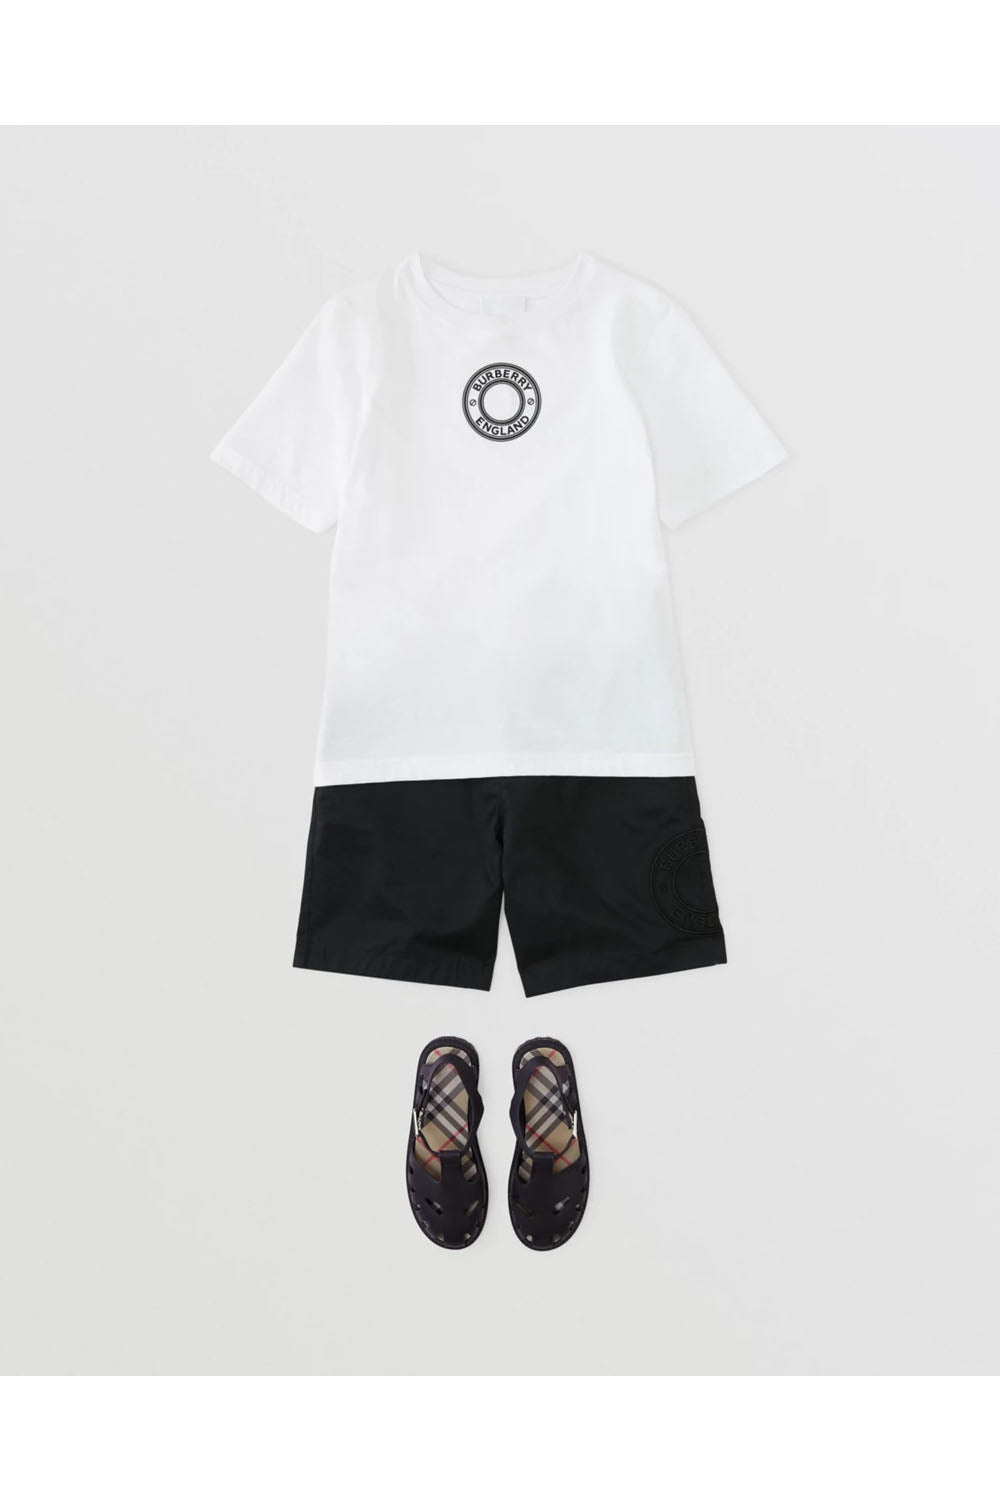 Cb Jerseywear Roundel for Boys - Maison7